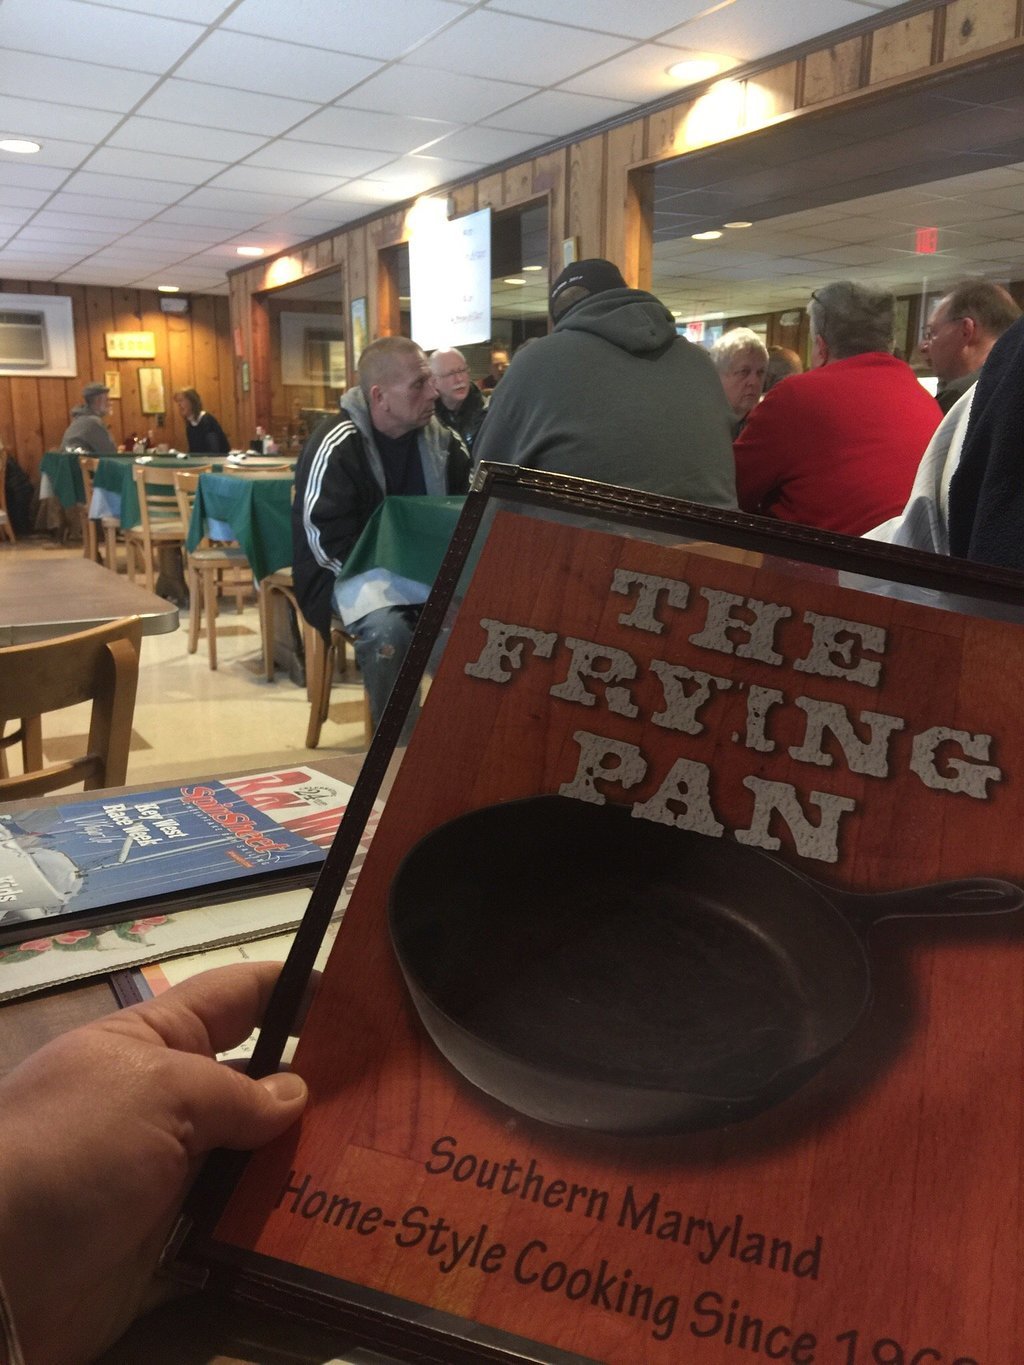 The Frying Pan